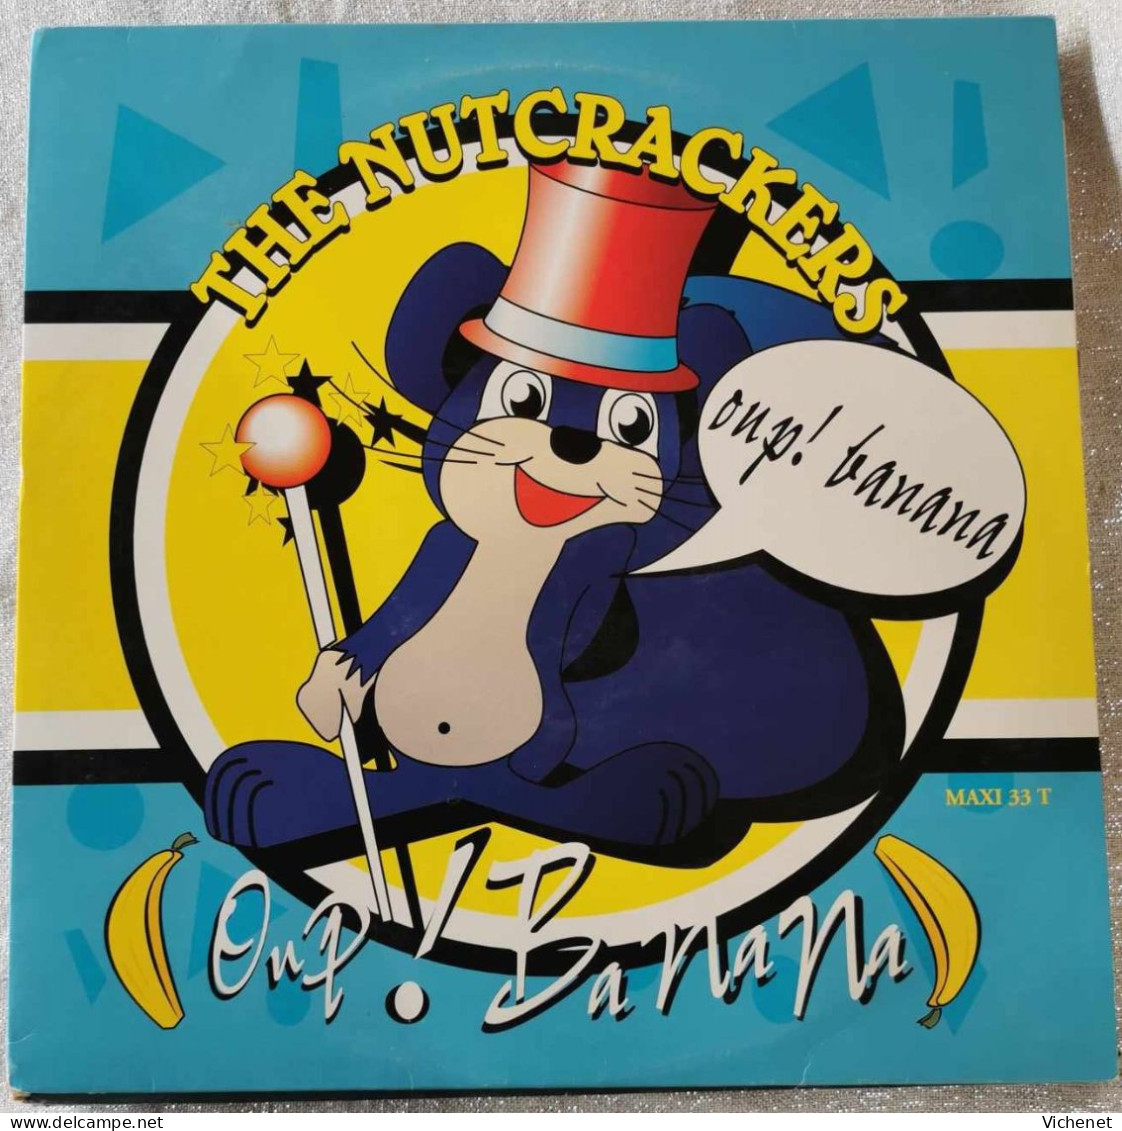 The Nutcrackers – Oup! Banana - Maxi - 45 T - Maxi-Single